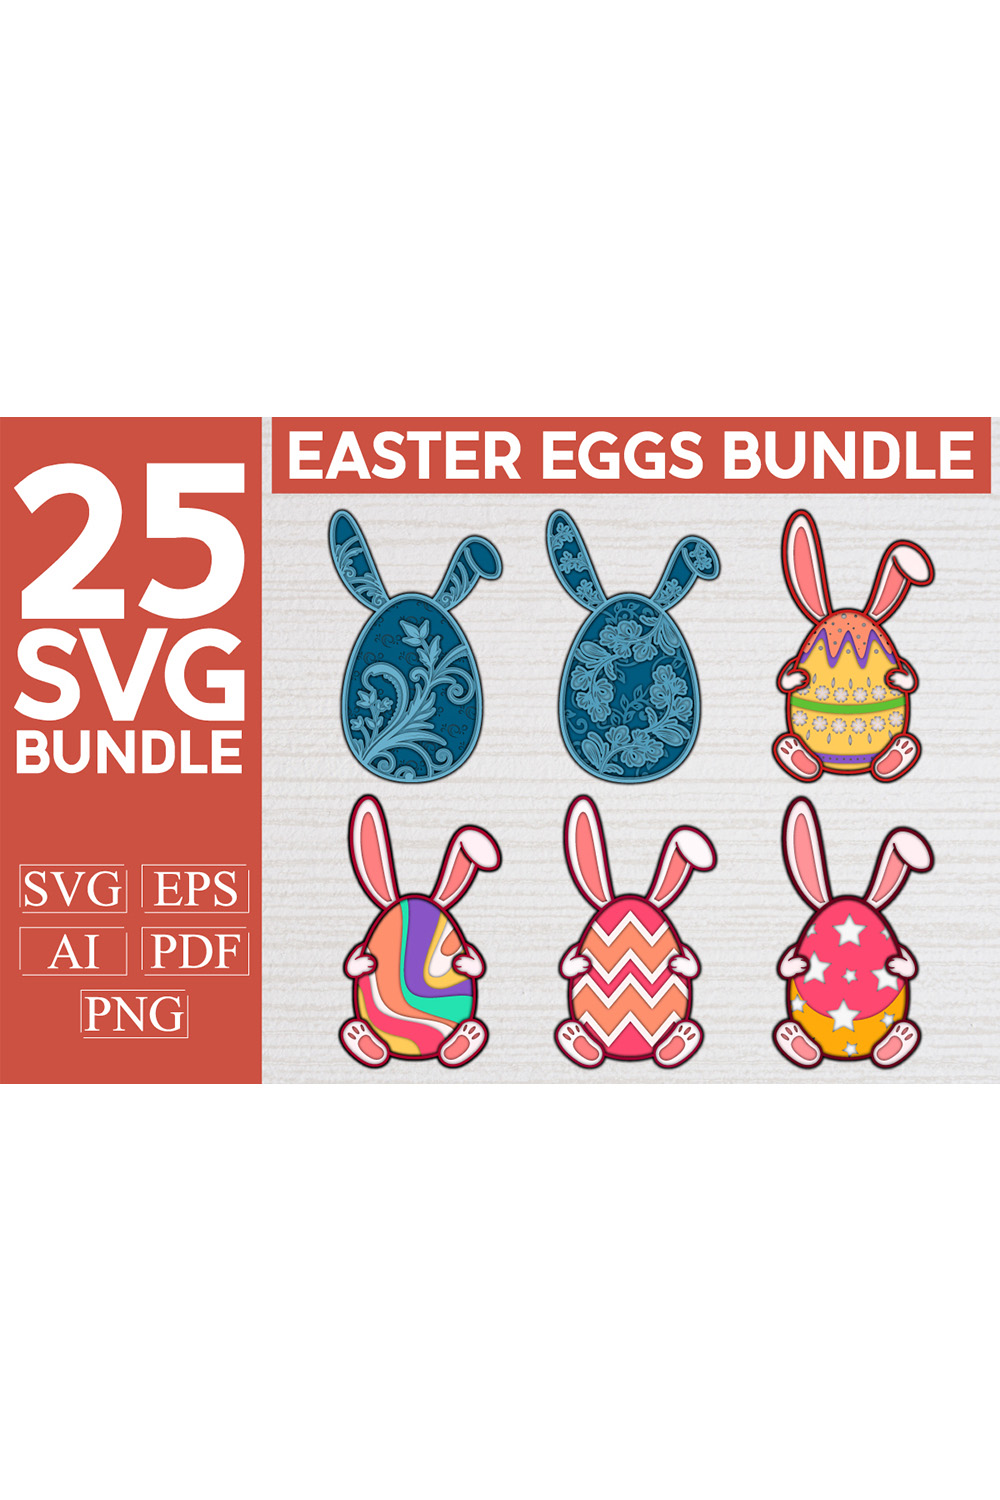 Easter Eggs 3D SVG bundle pinterest preview image.